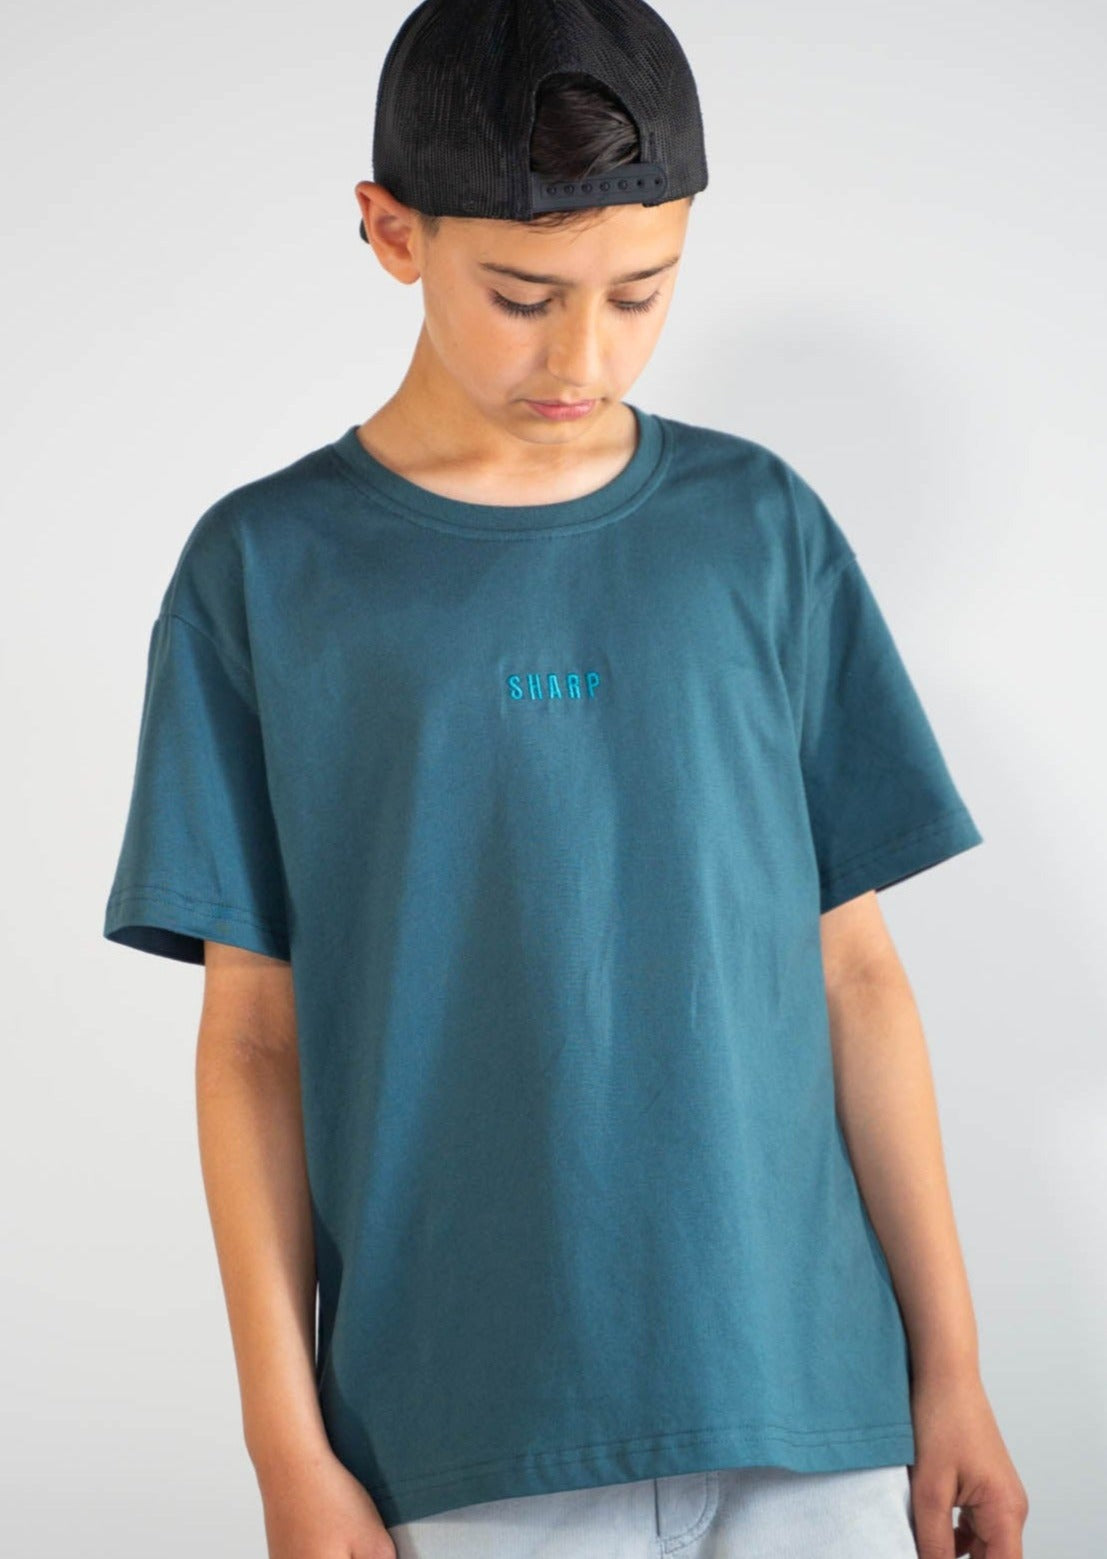 Kids Premium Oversized T-Shirt - Teal